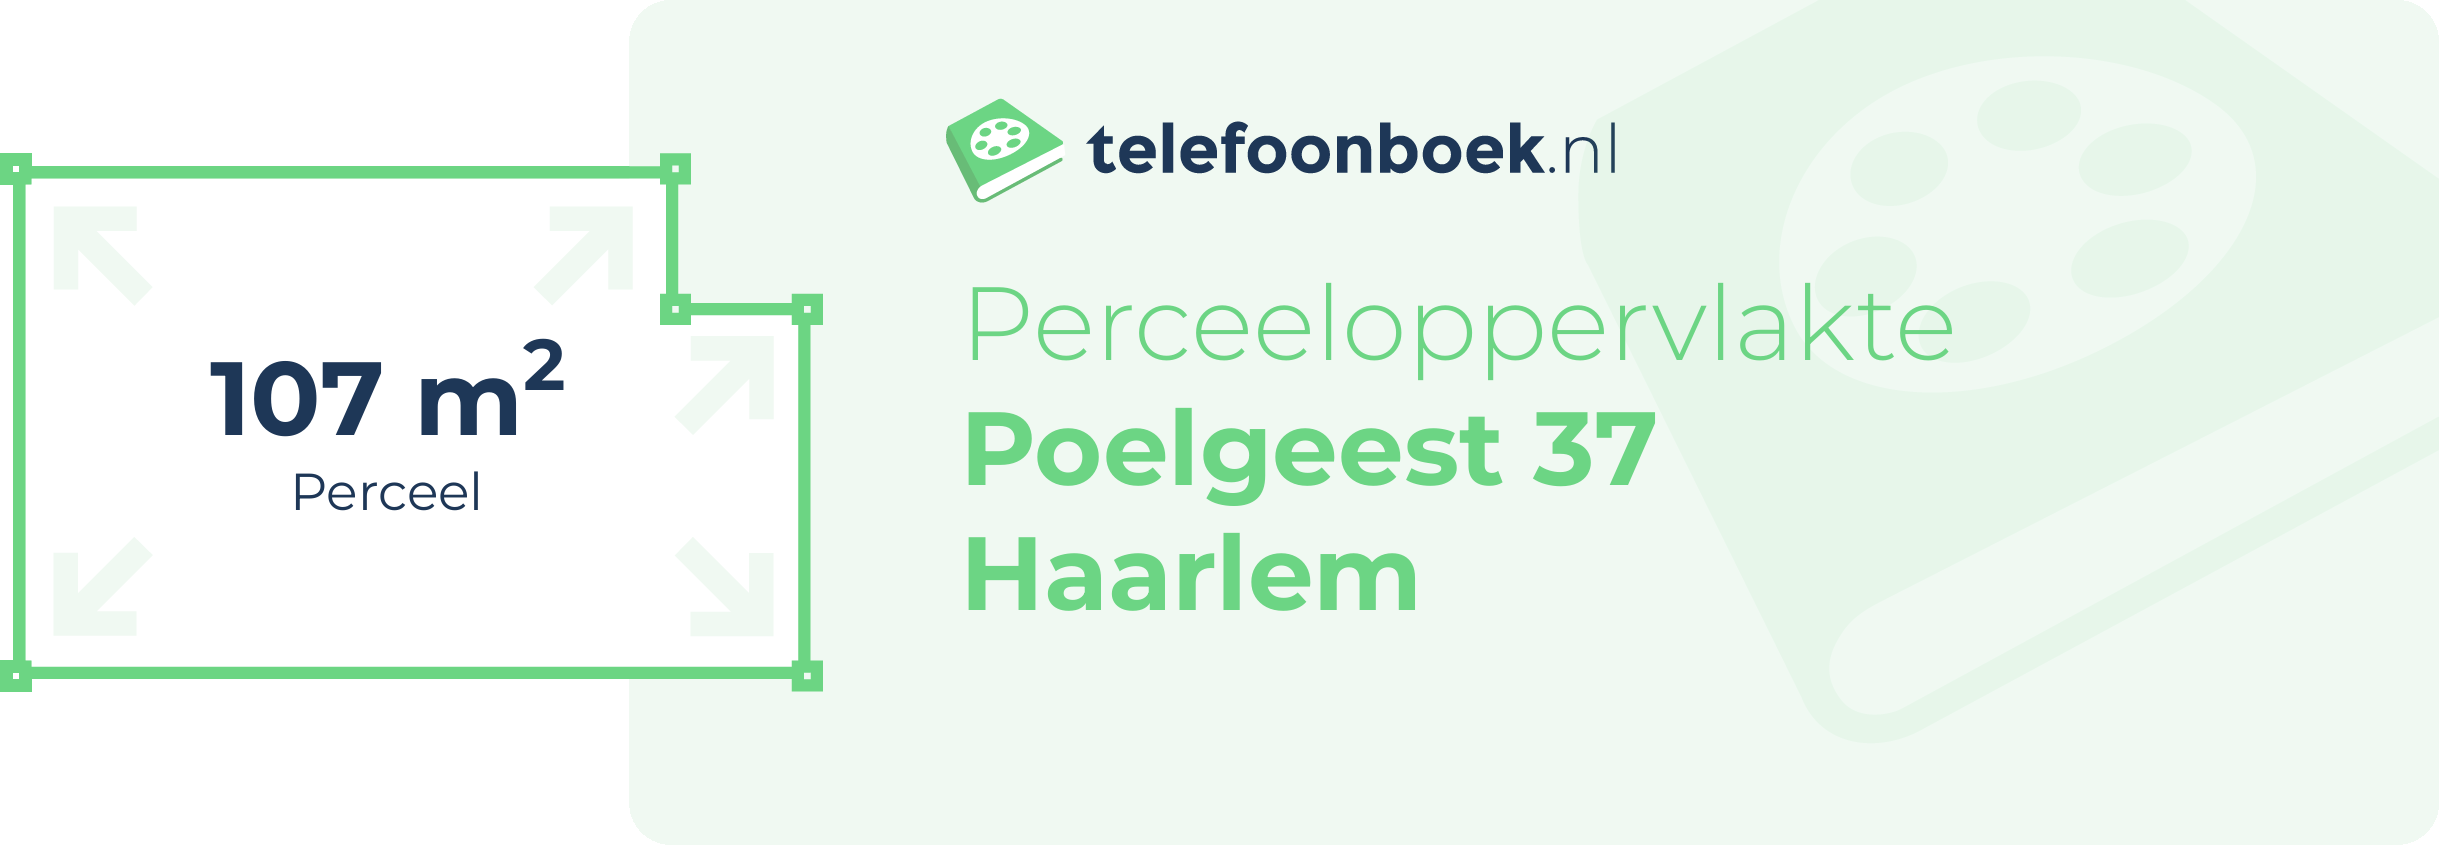 Perceeloppervlakte Poelgeest 37 Haarlem